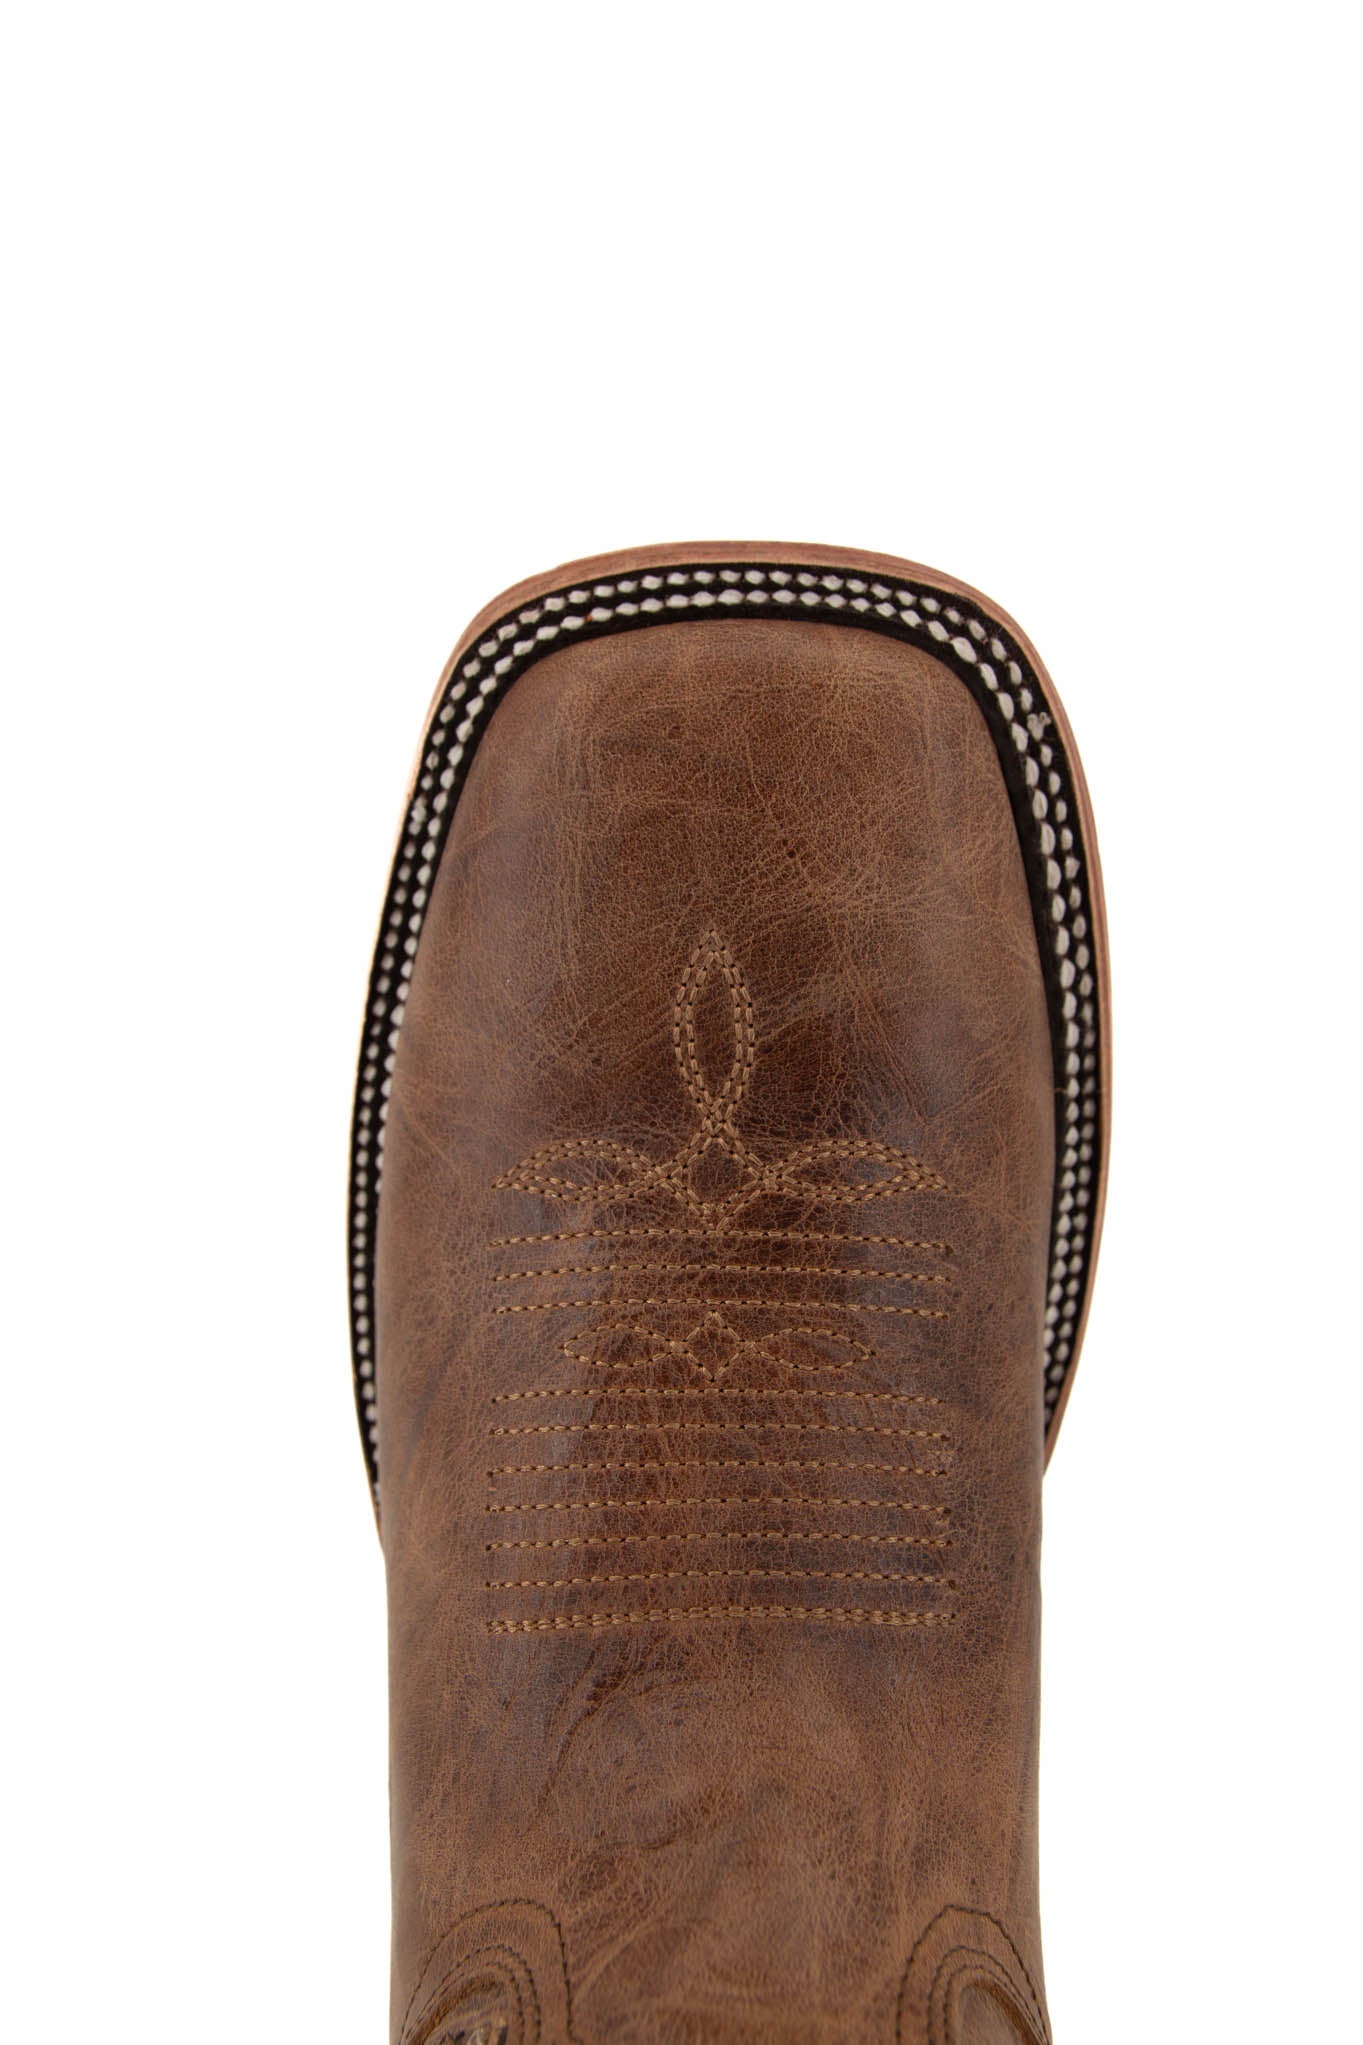 Est. Huichol Aztec Square Toe Cowboy Boots